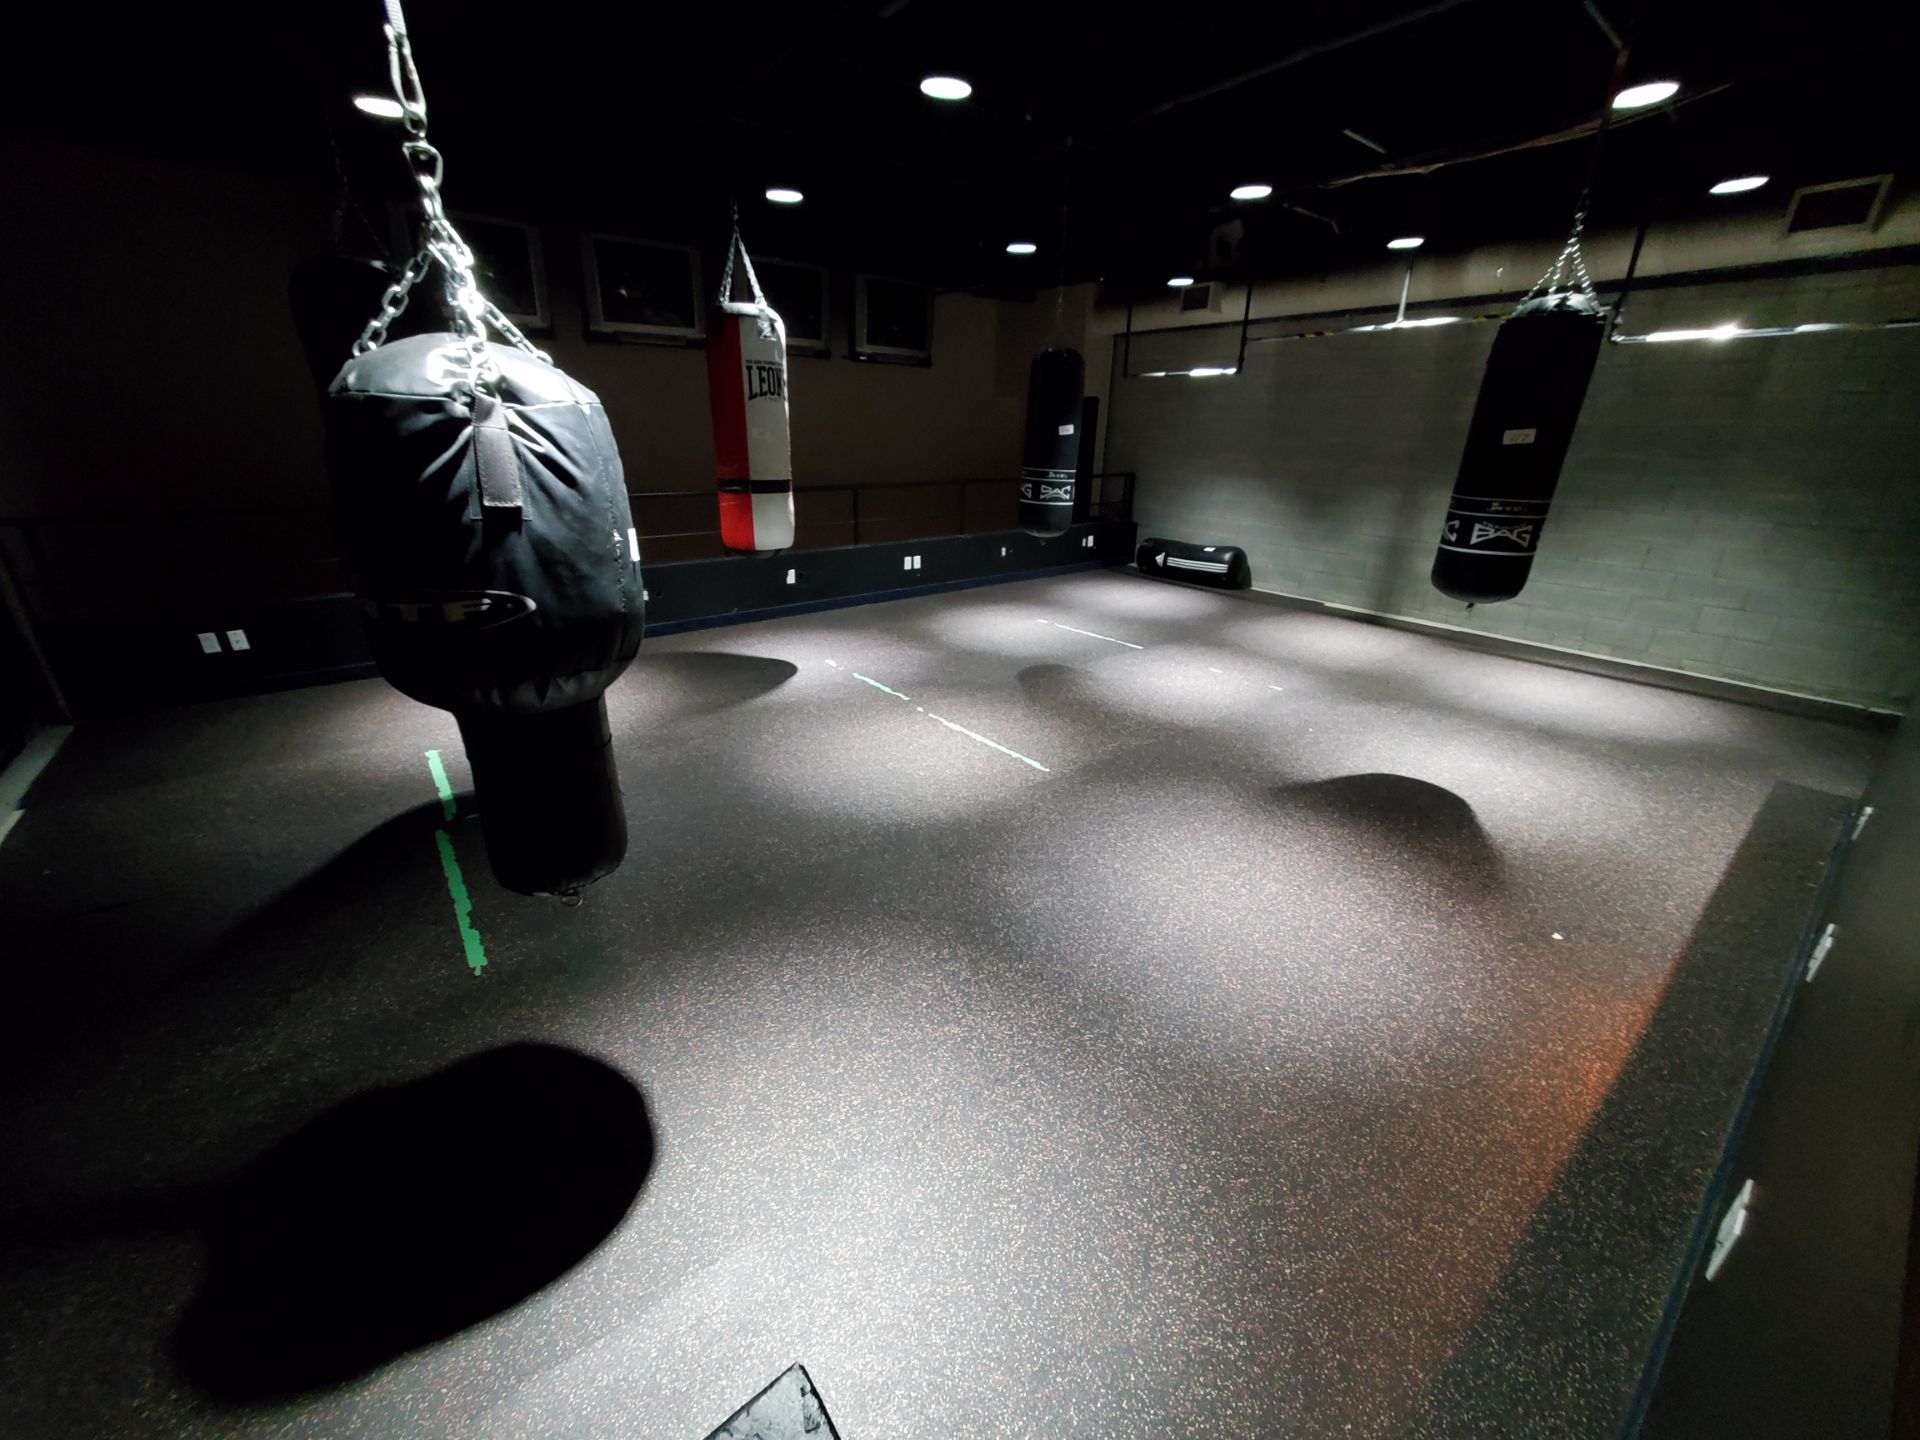 Rubber Flooring On Mezzanine (Boxing Room)